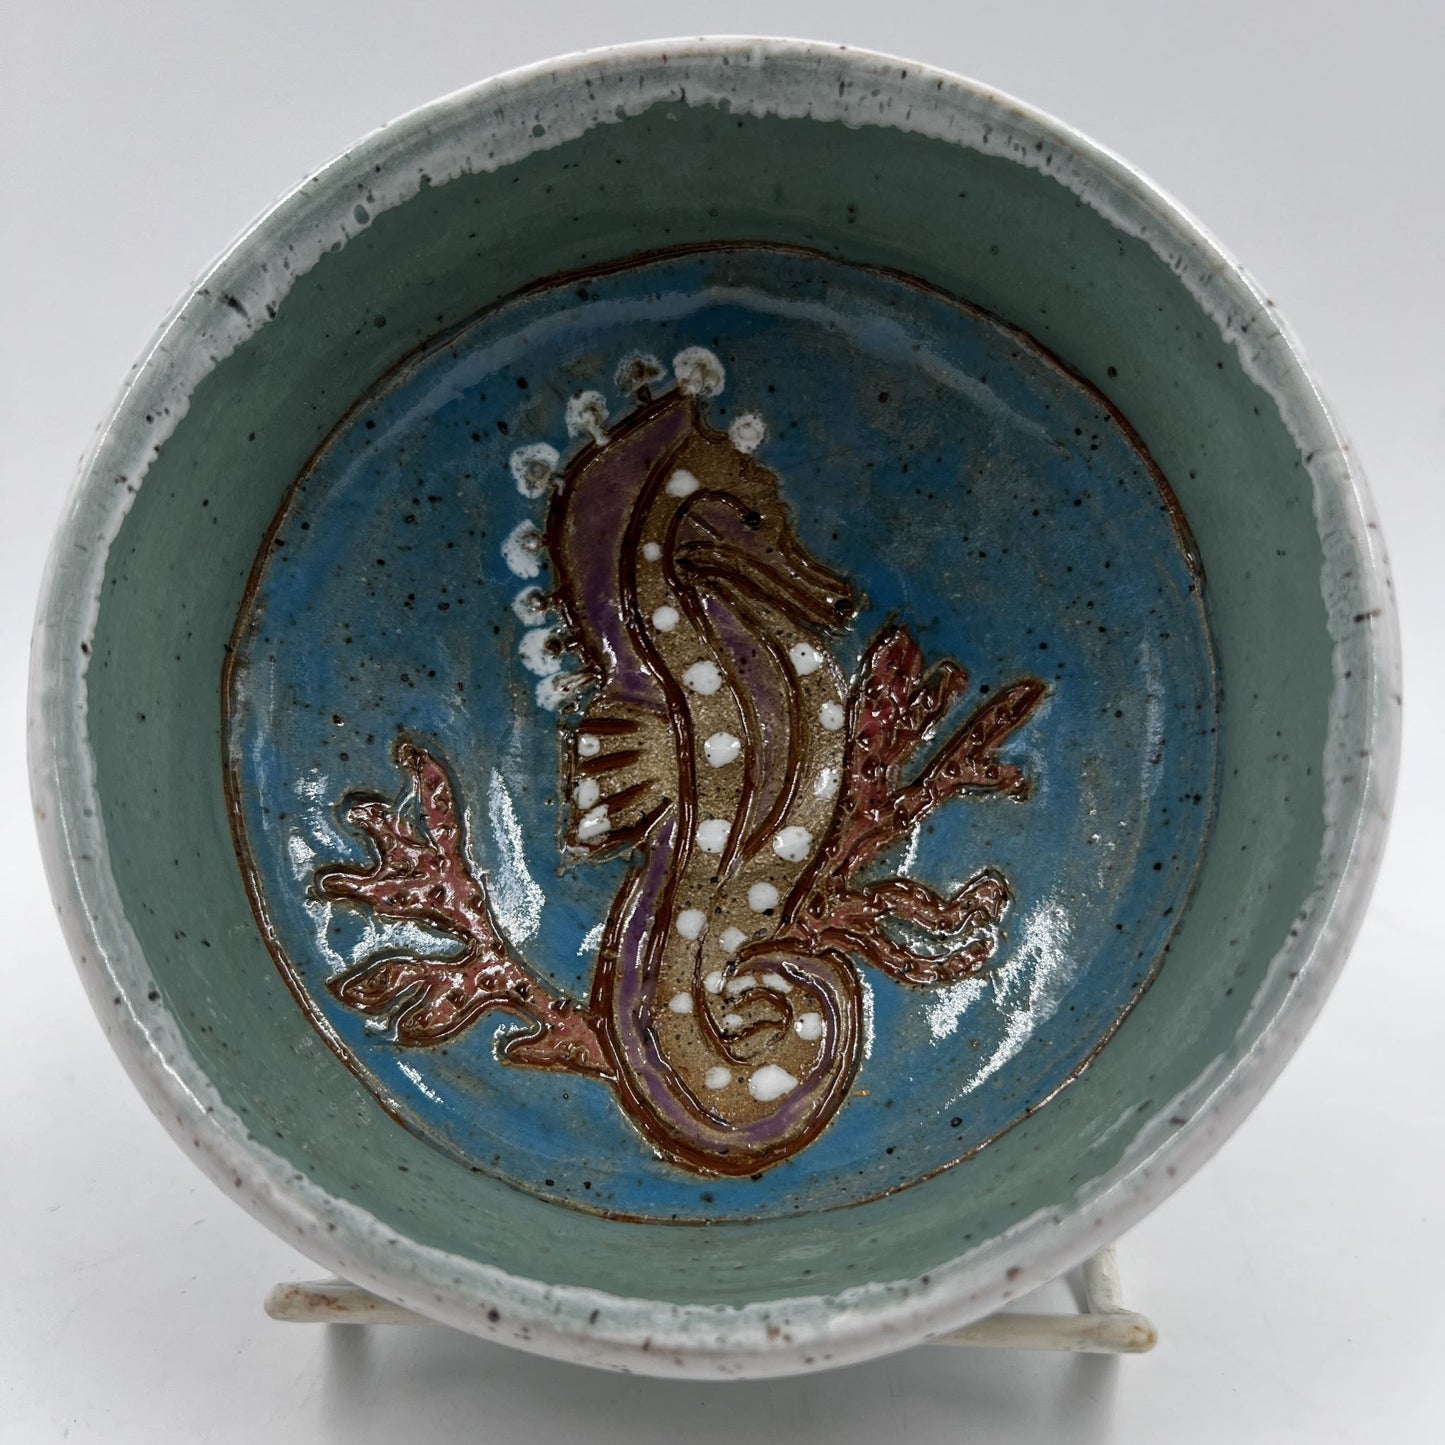 Details of SAS Seahorse Hand Painted Stoneware Bowl